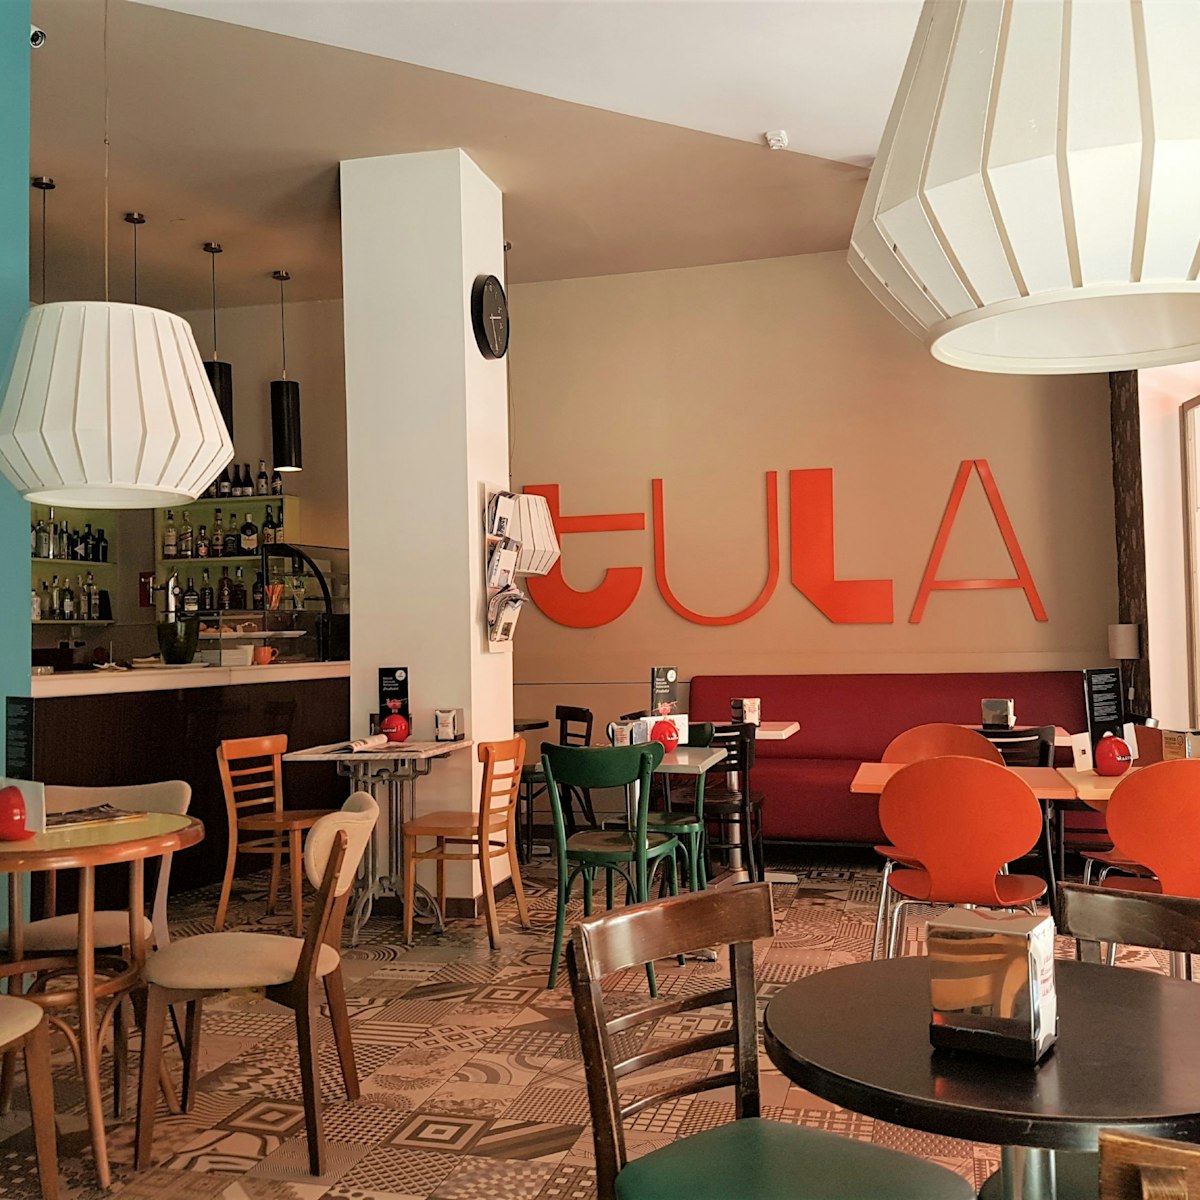 Inside entrance of Tula Café